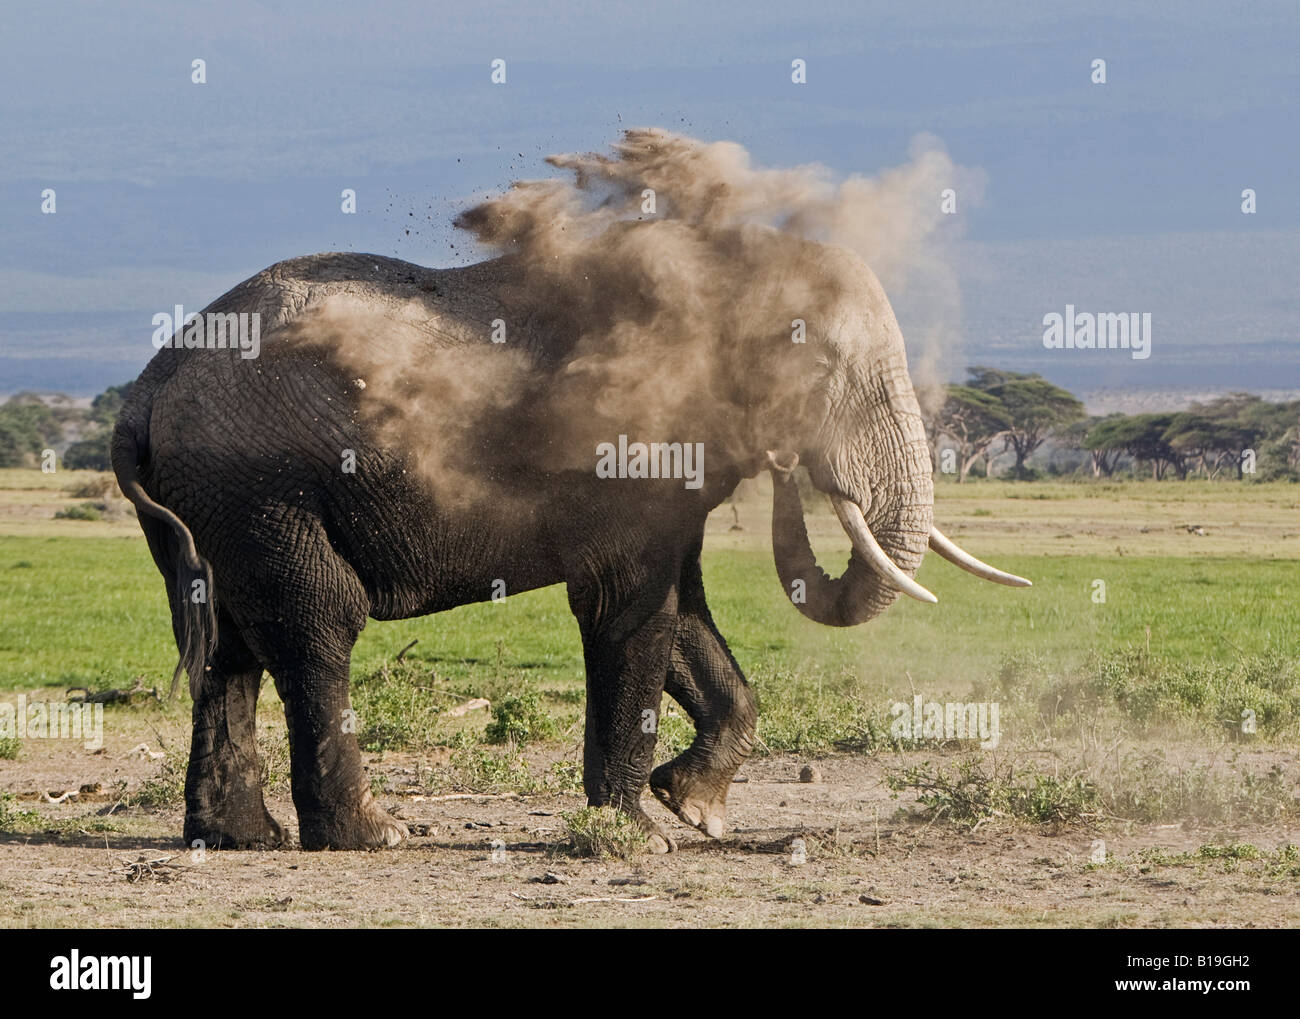 Kenya, Amboseli, Amboseli National Park. An elephant (Loxodonta africana) dusting itself on the edge of the Amboseli swamp area. Stock Photo